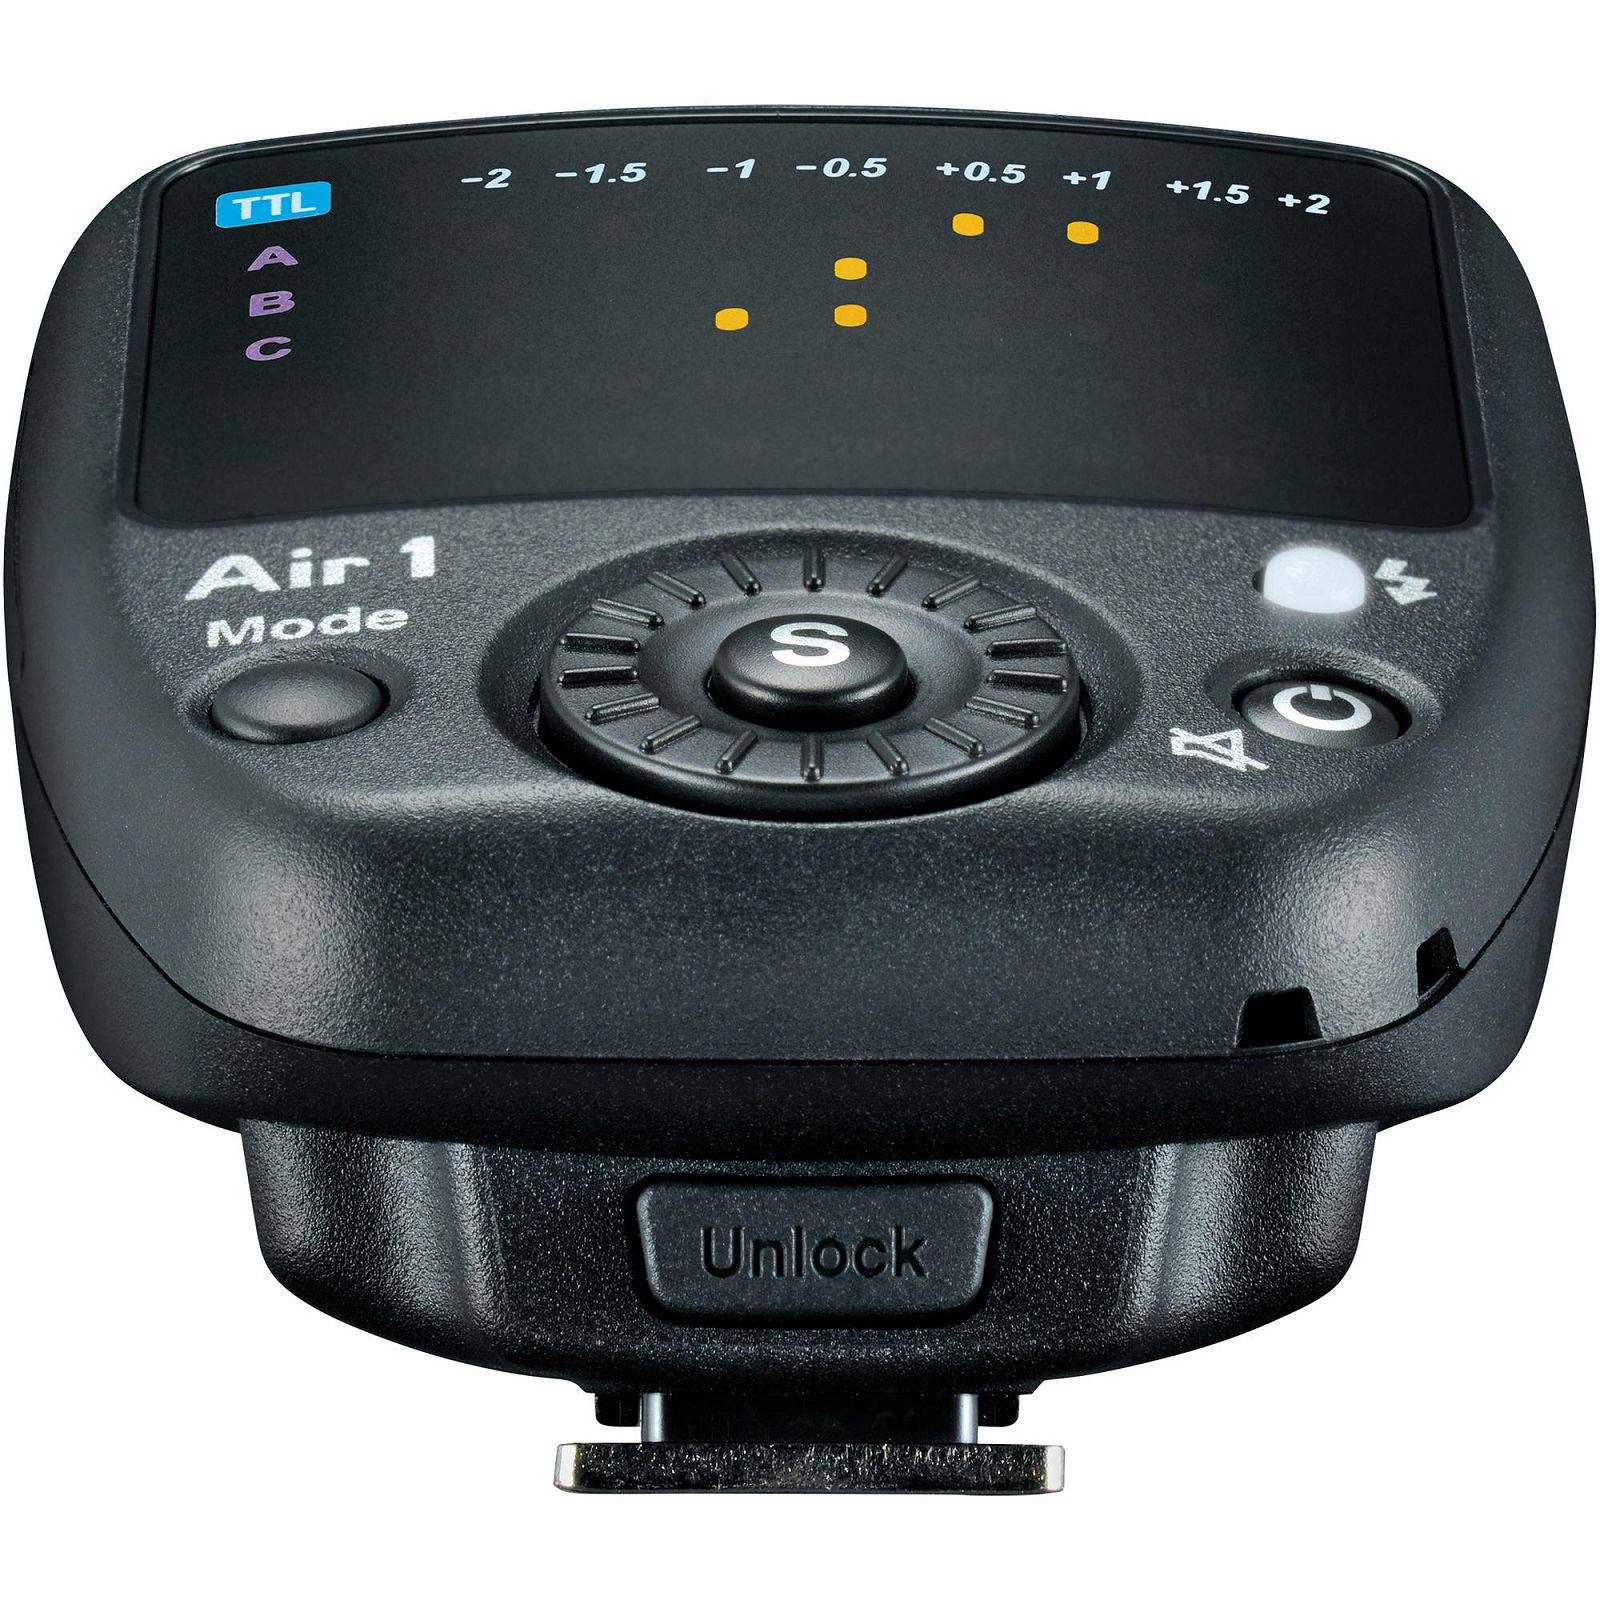 Nissin Commander Air 1 TTL HSS transmitter odašiljač za Nikon